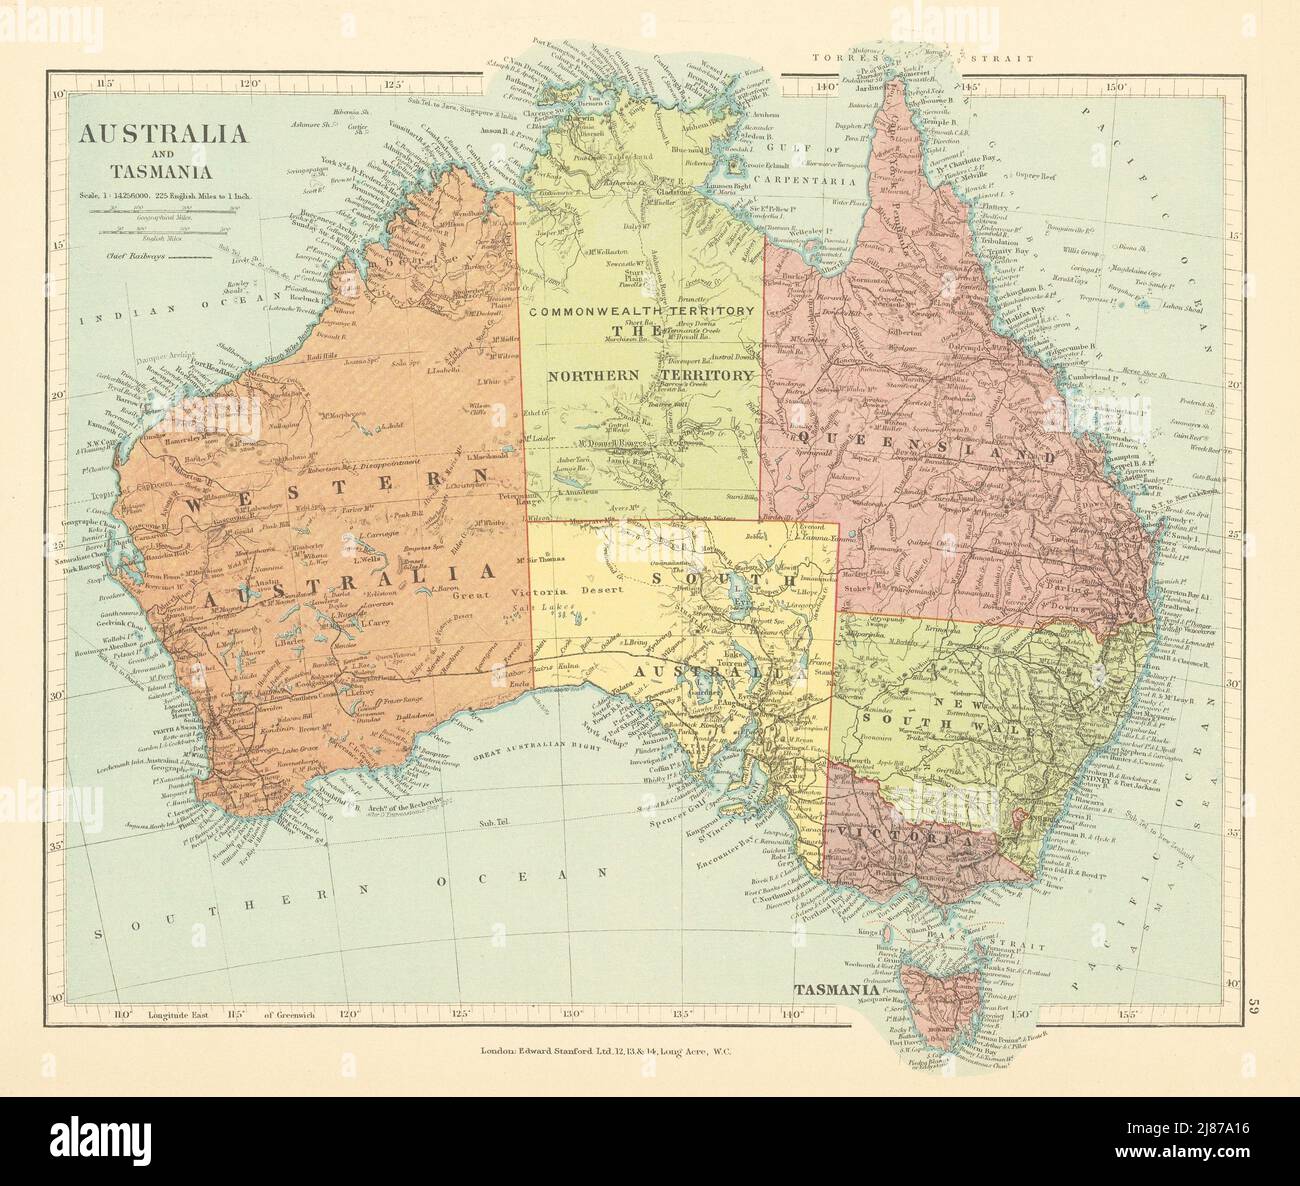 Australia Tasmania Northern Territory Commonwealth Territory STANFORD c1925 map Stock Photo